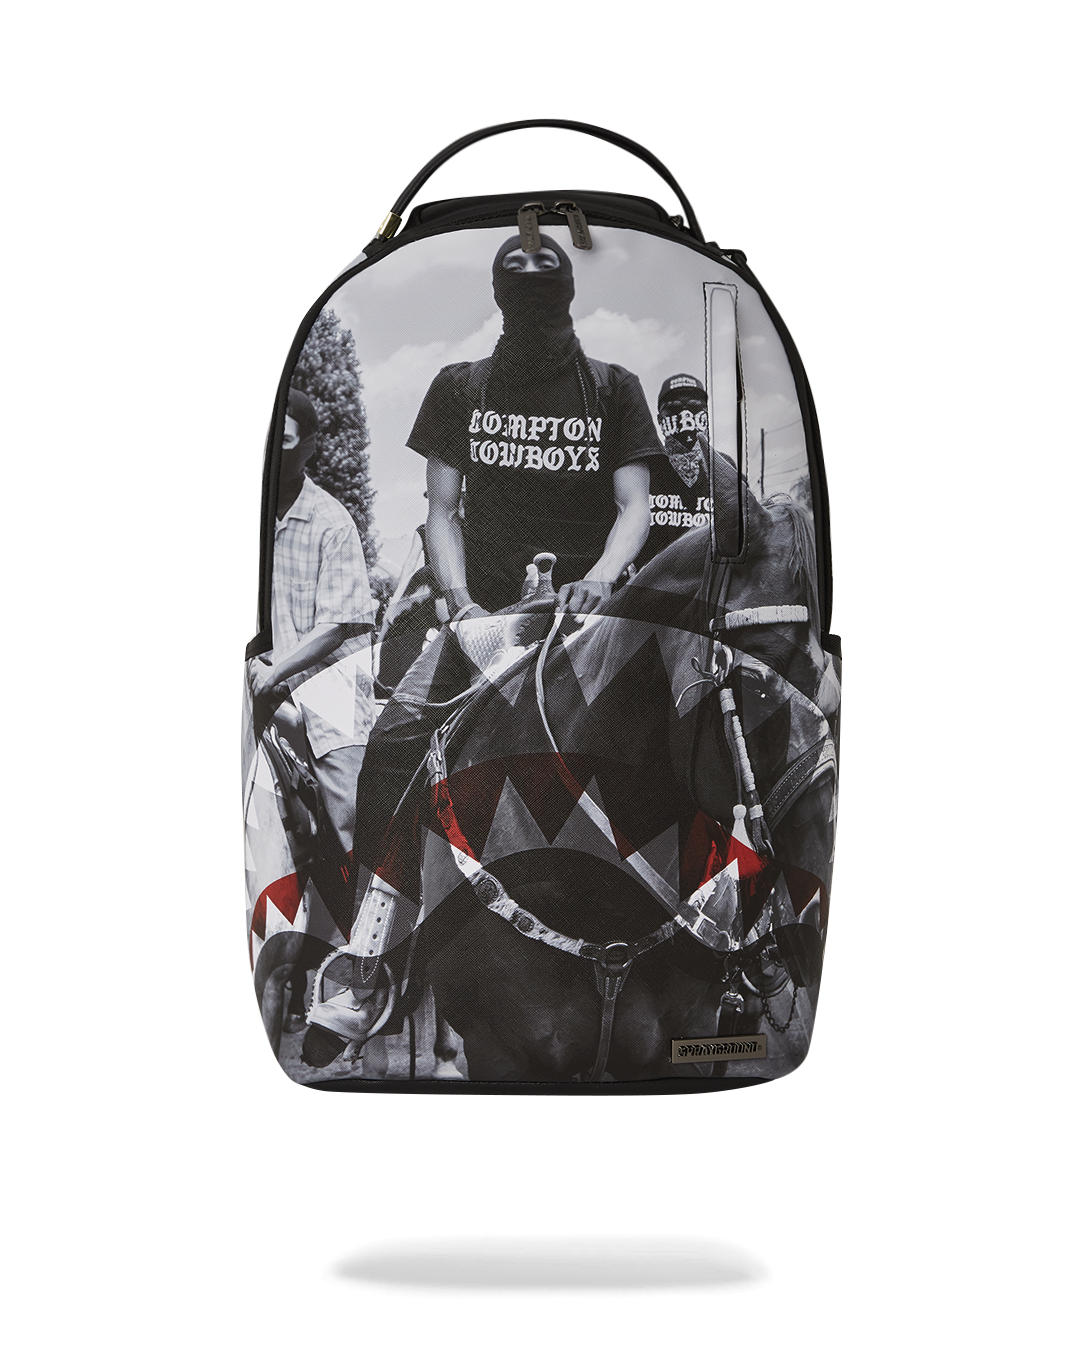 Sprayground Compton Cowboys Backpack 